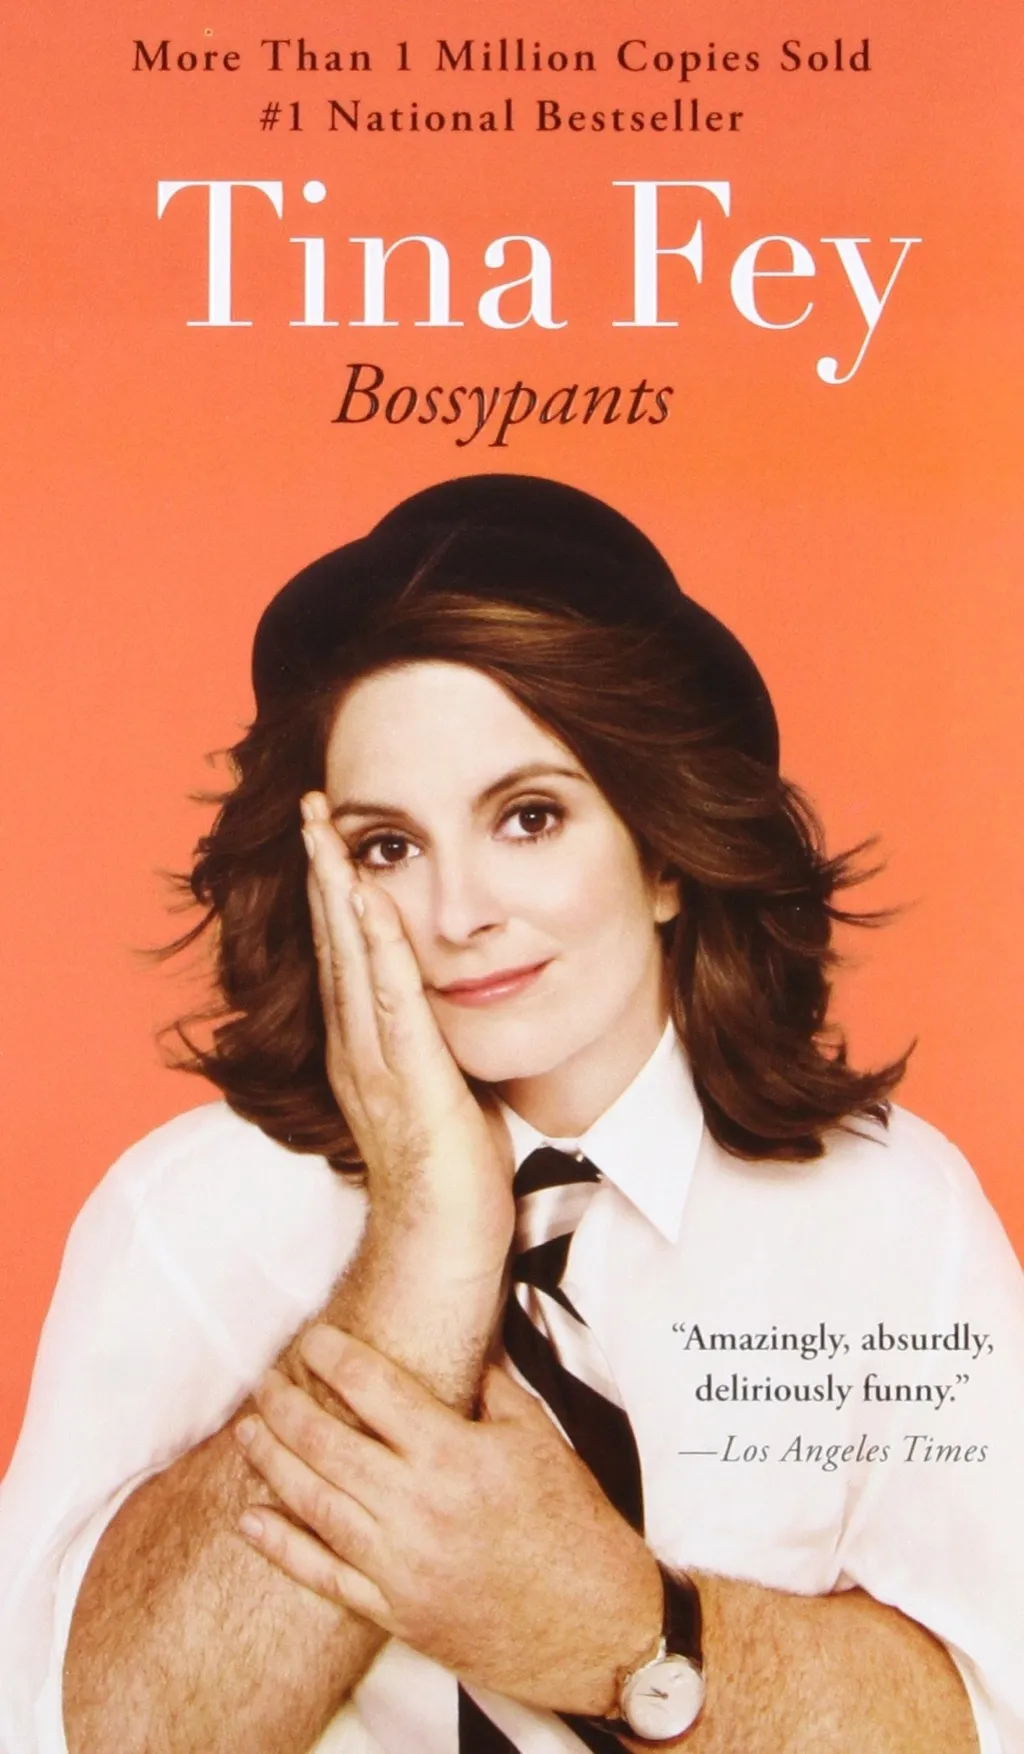 Bossypants Books funniest Celebrity Books